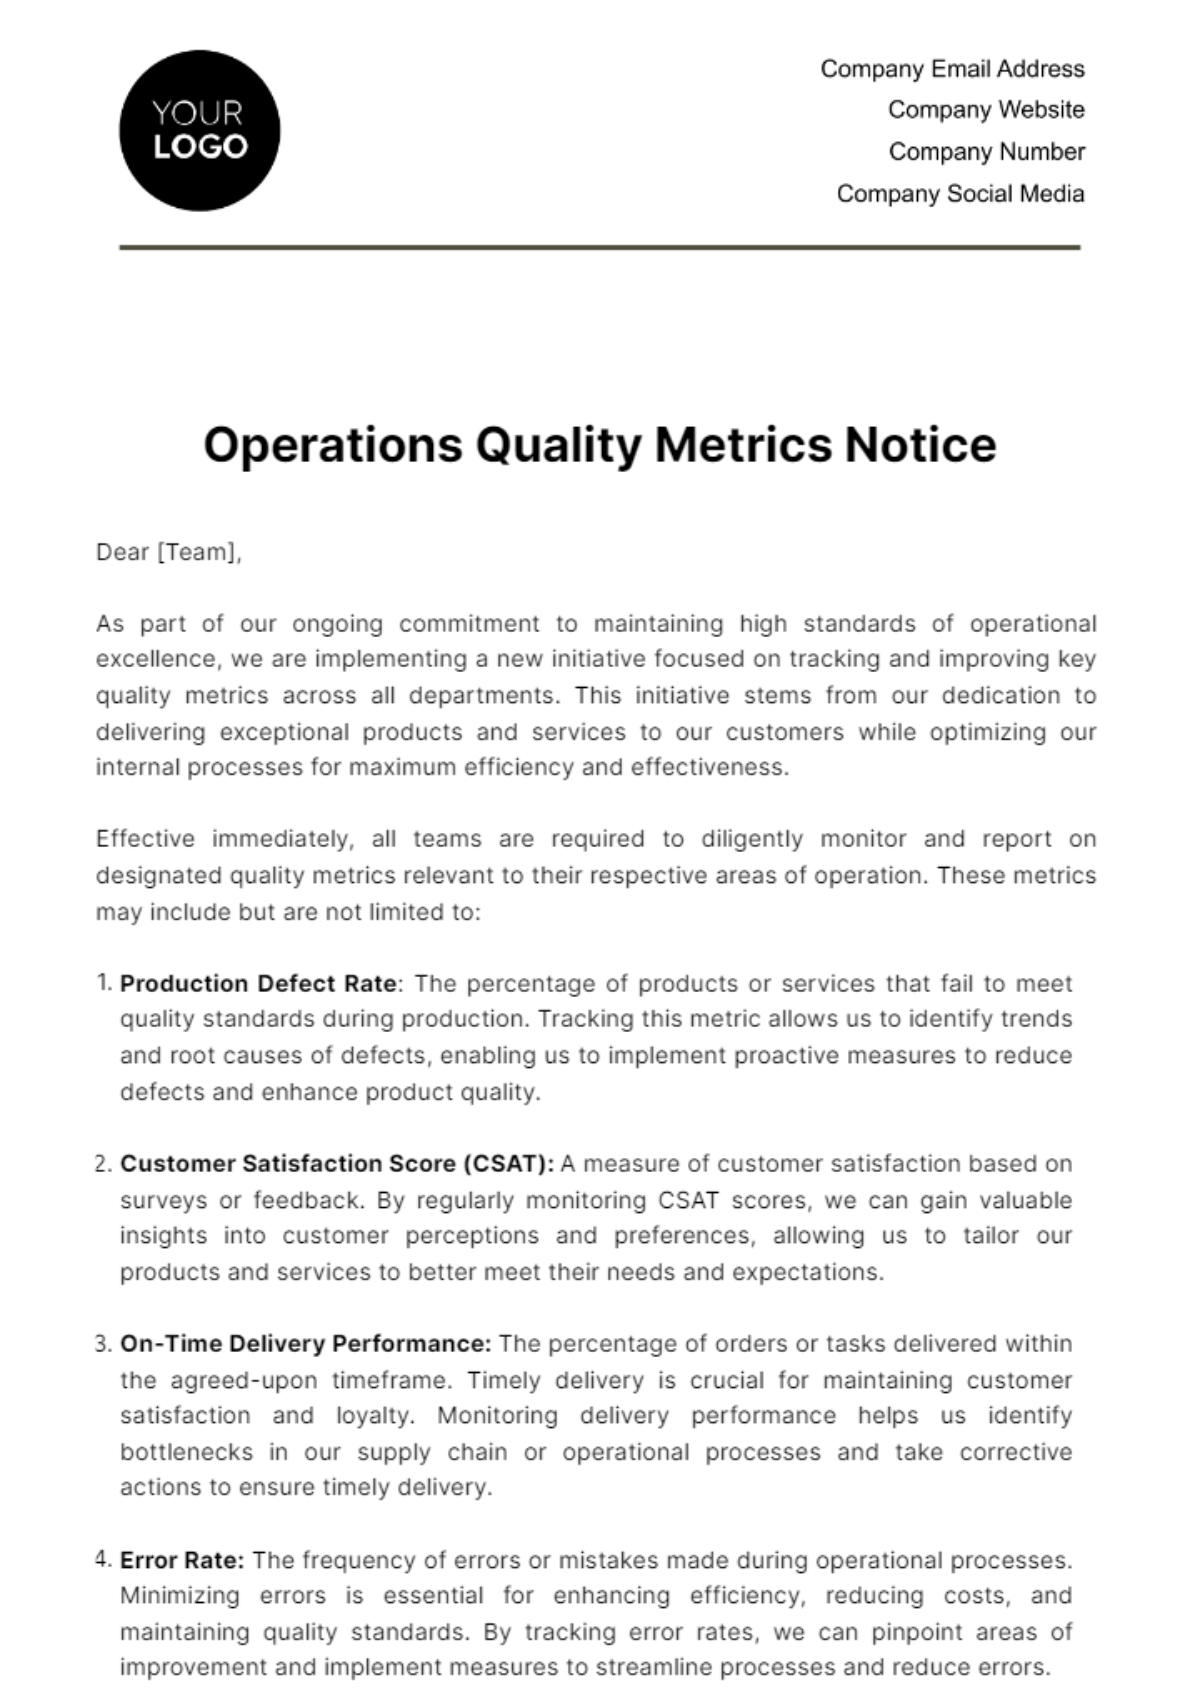 Free Operations Quality Metrics Notice Template